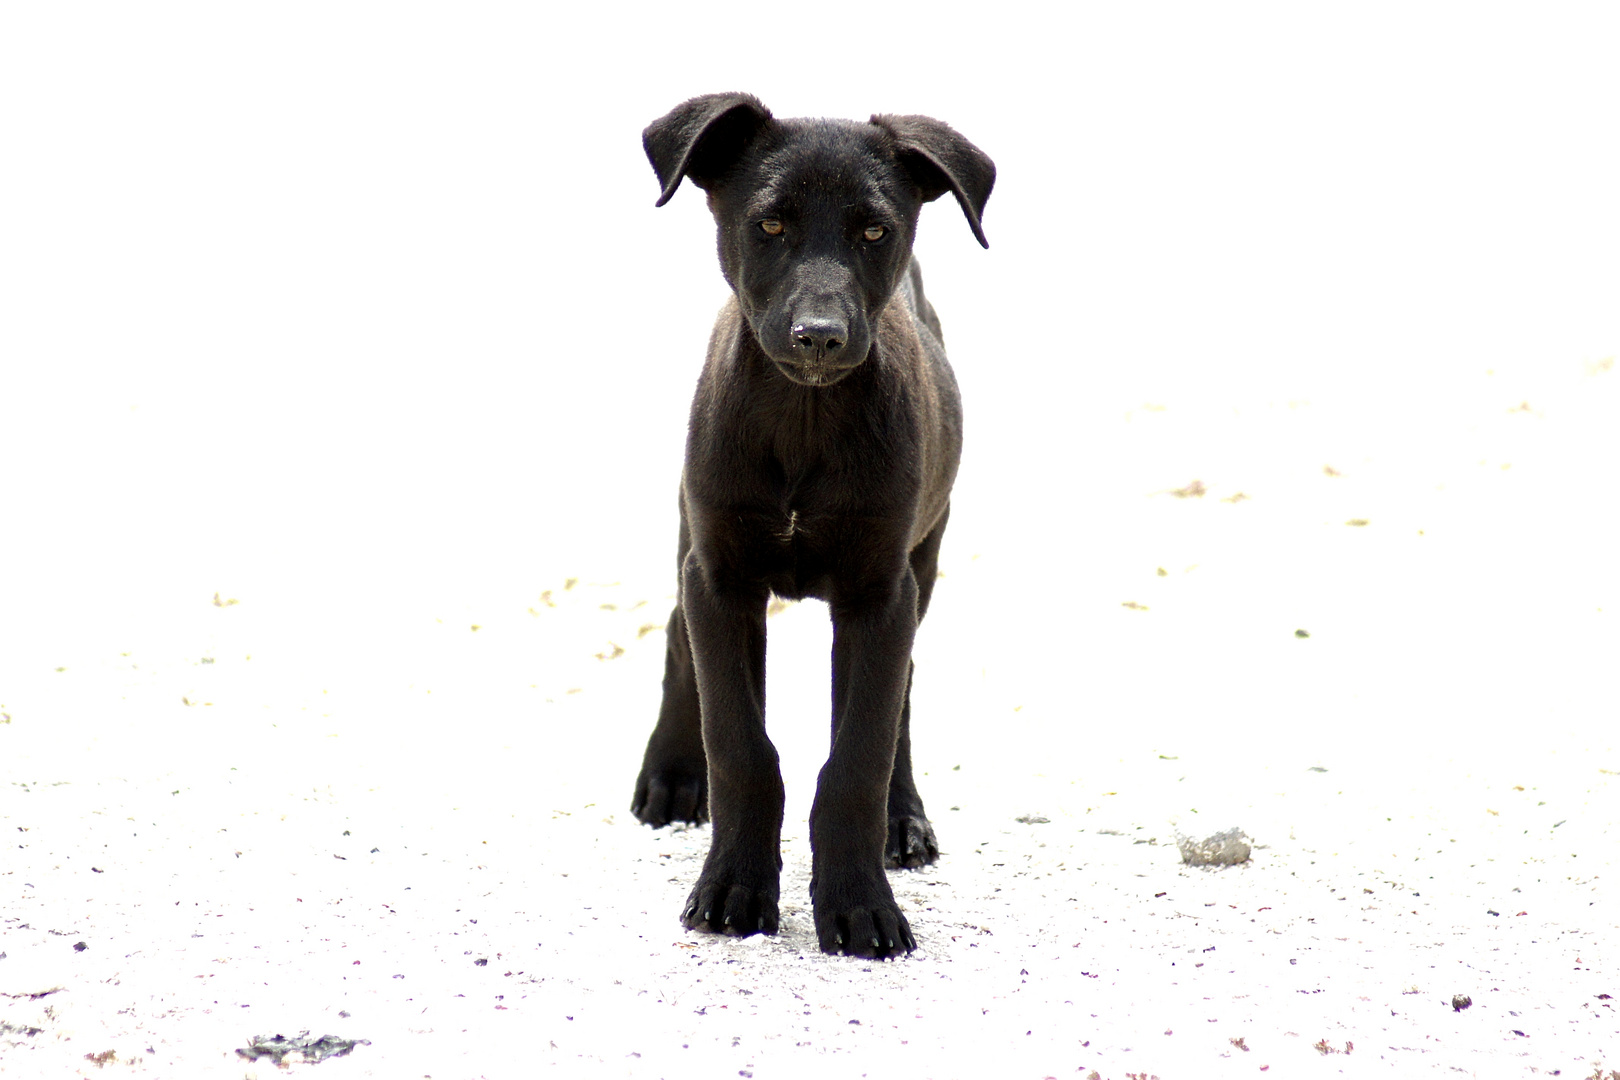 Stray dog - a puppy's portrait